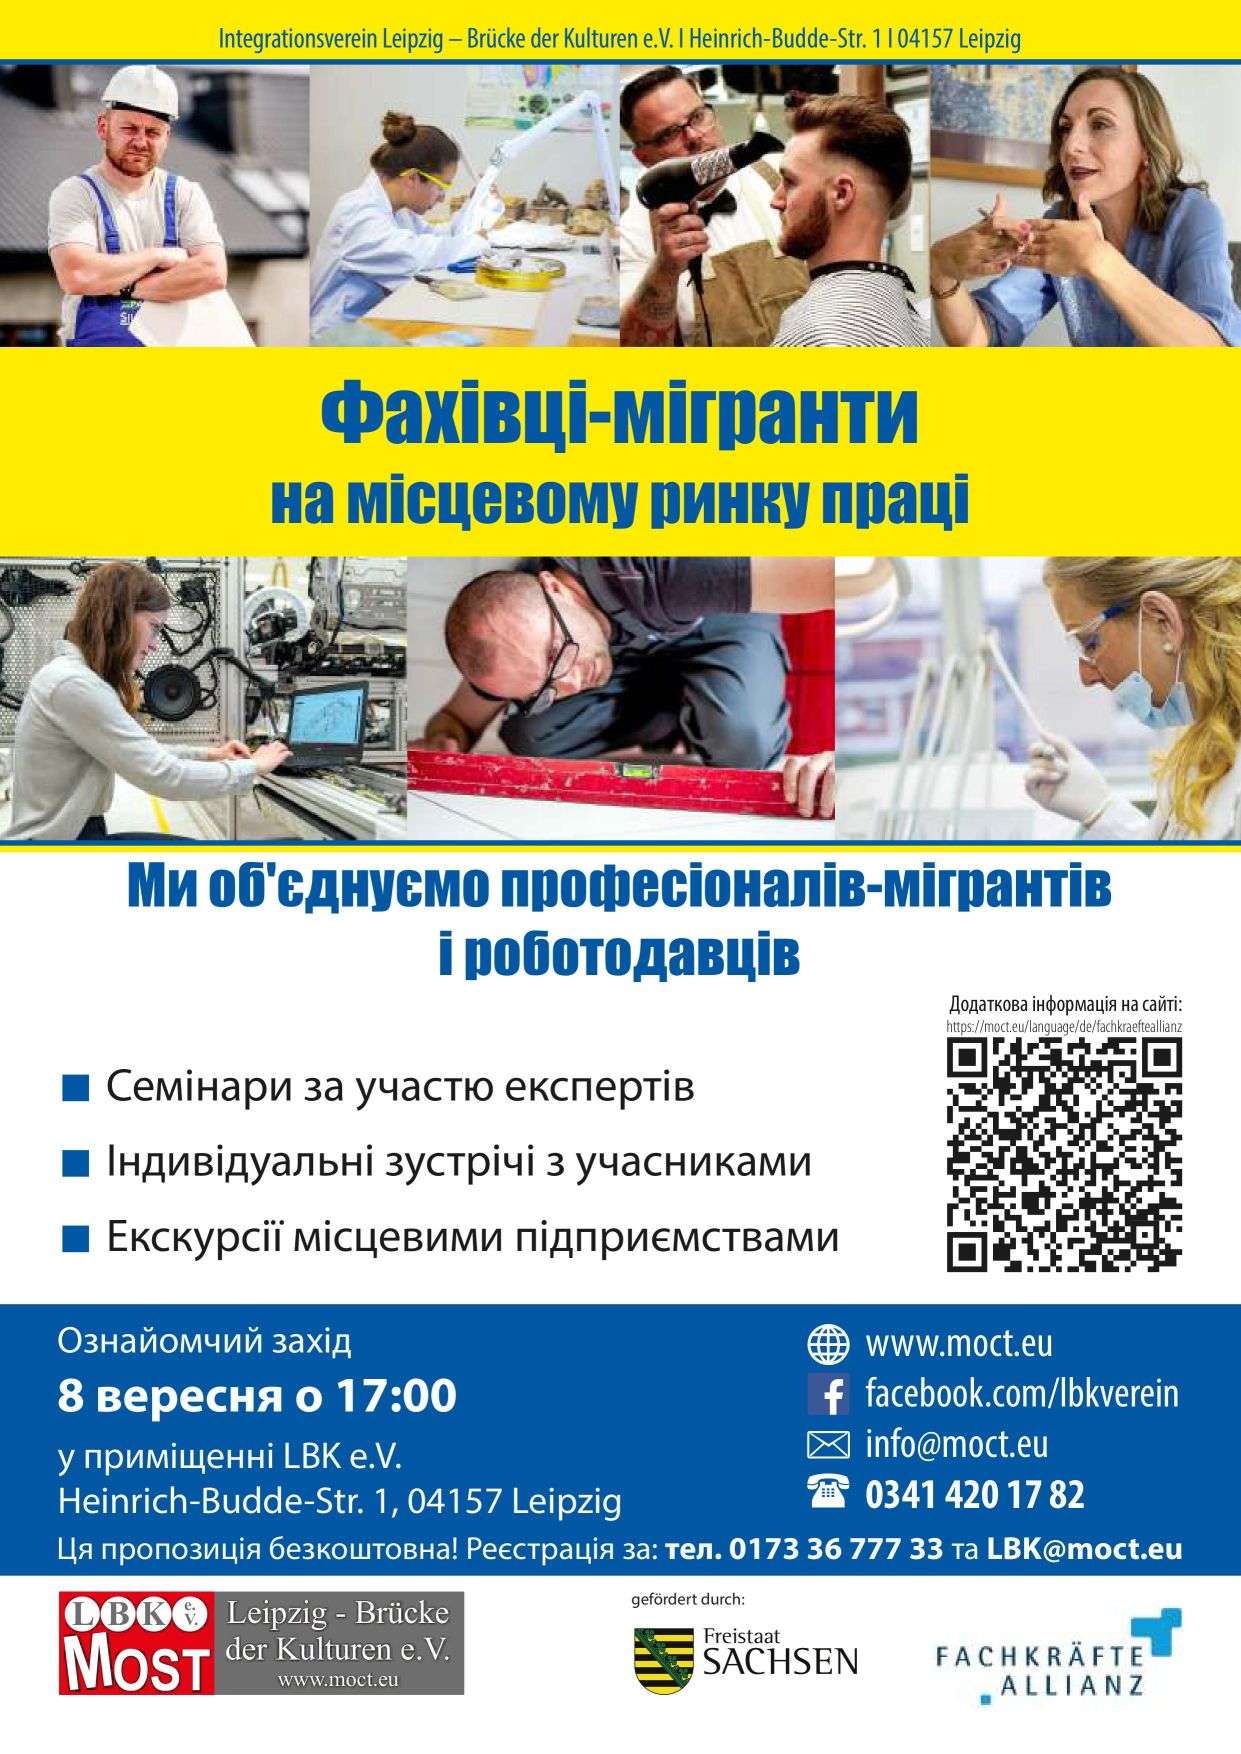 Plakat in ukrainischer Sprache